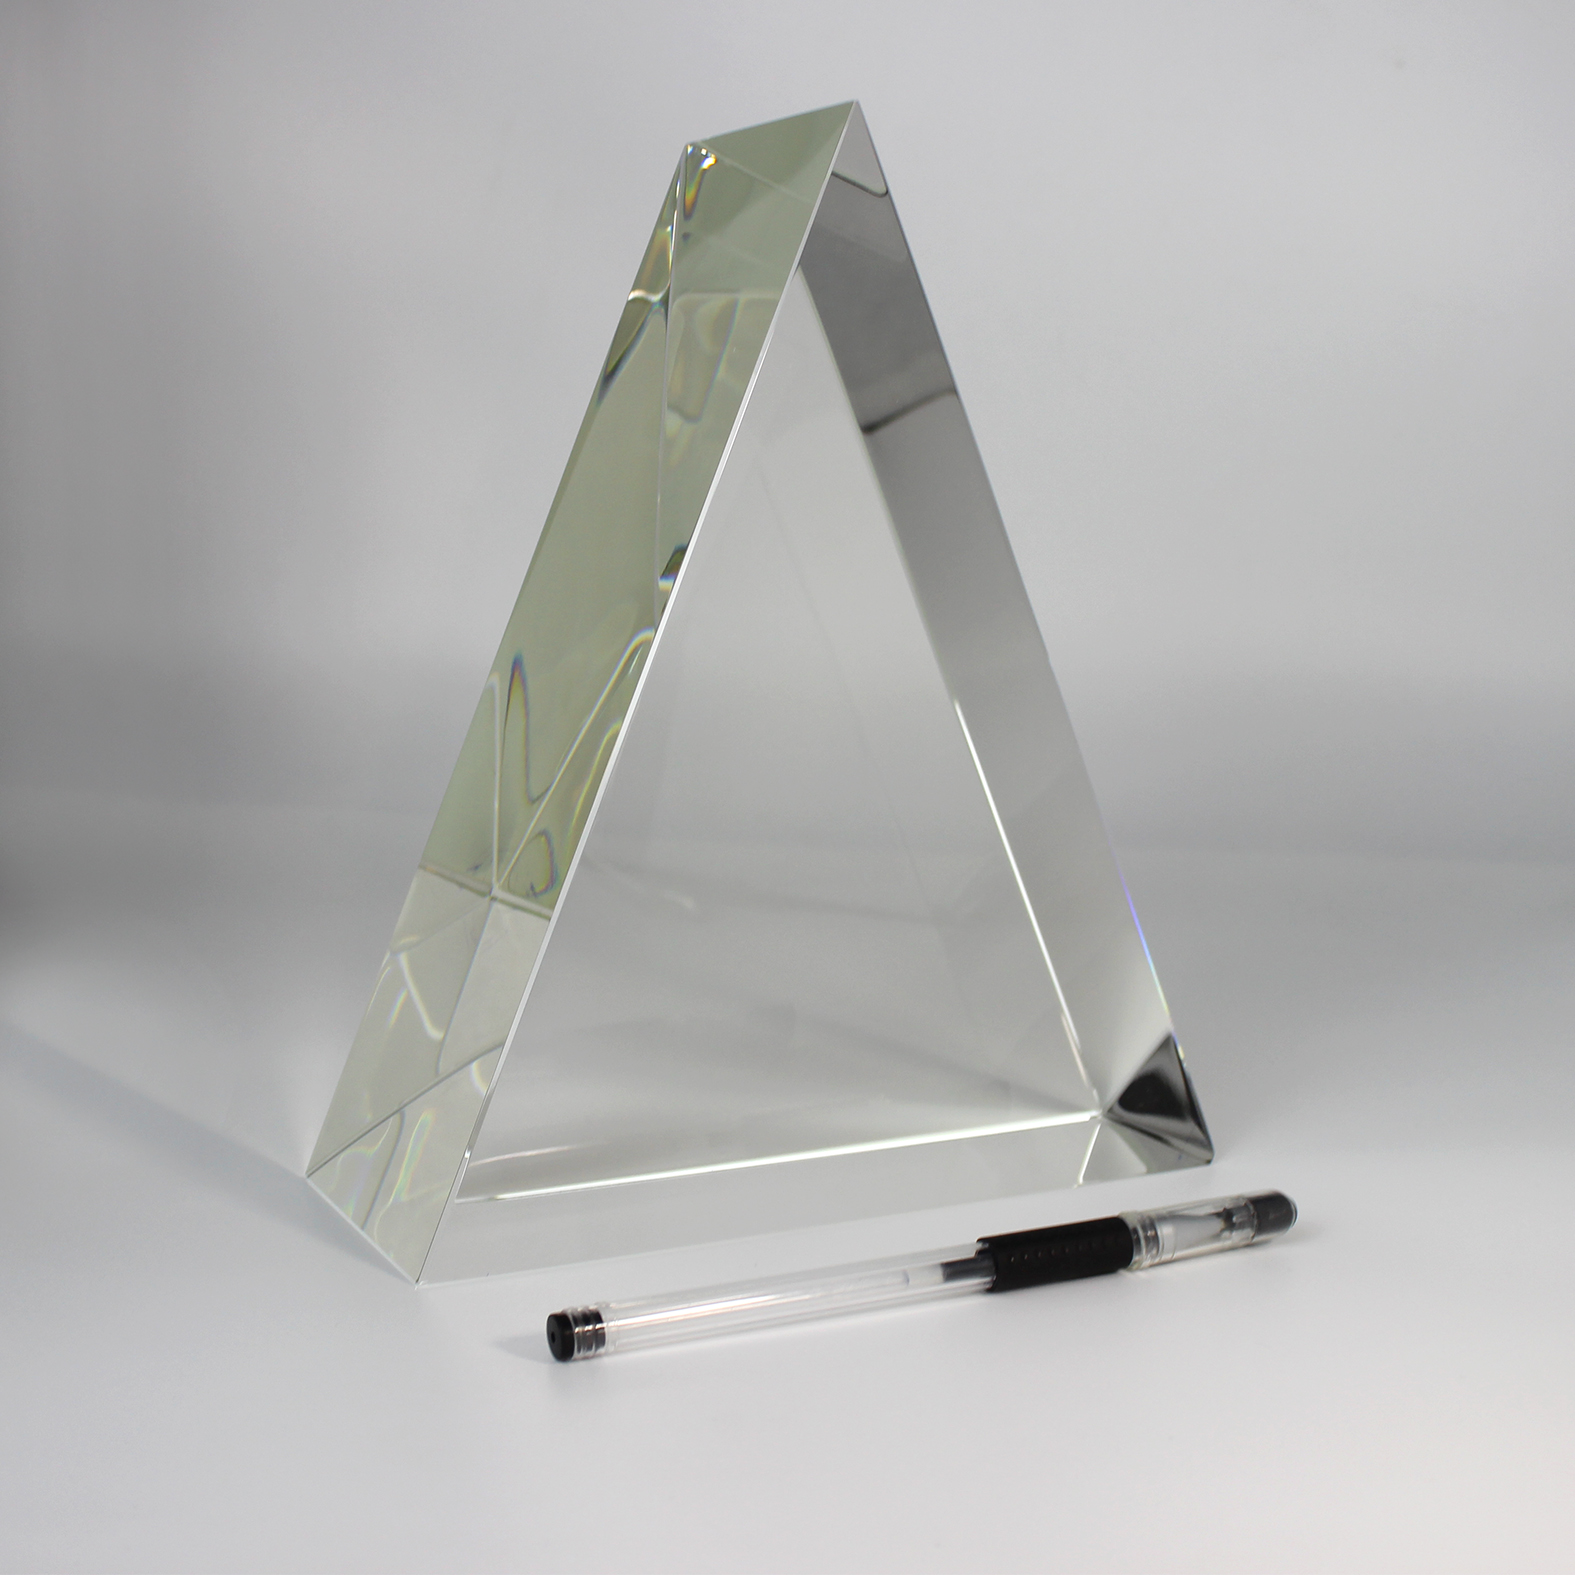 Optical K9 Quartz Glass Triangular Prism for Student Teaching and Photography